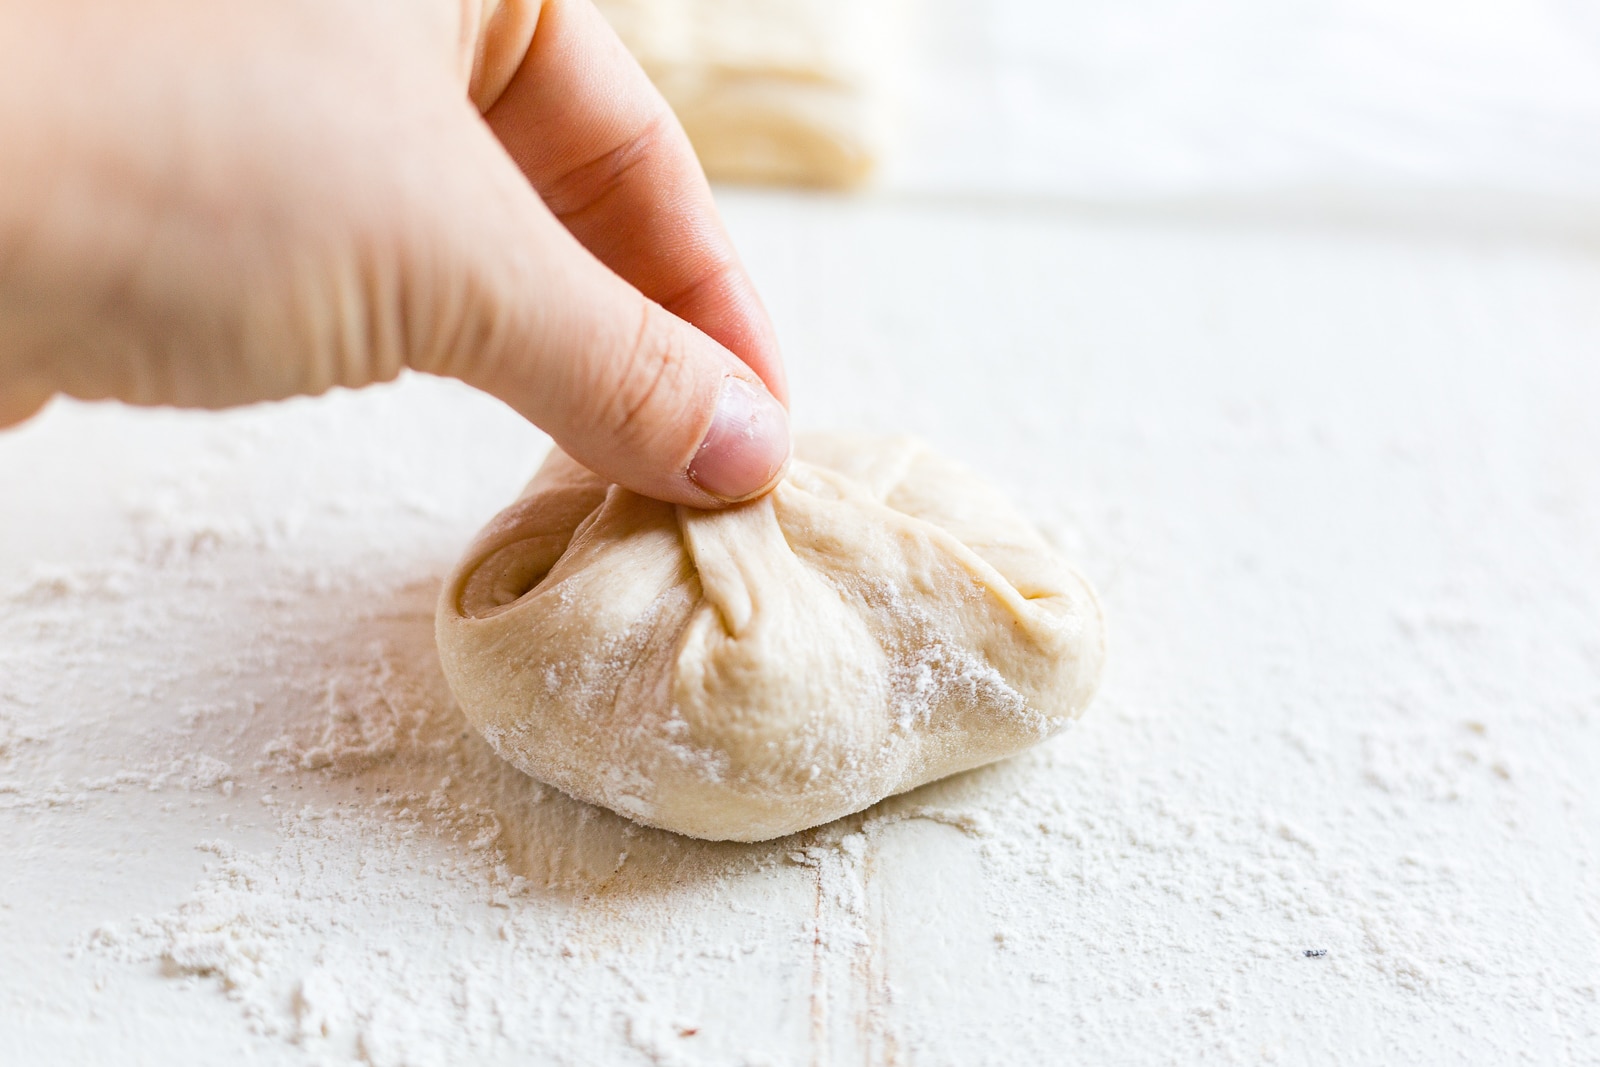 hand pinching sourdough rolls to shape them before baking